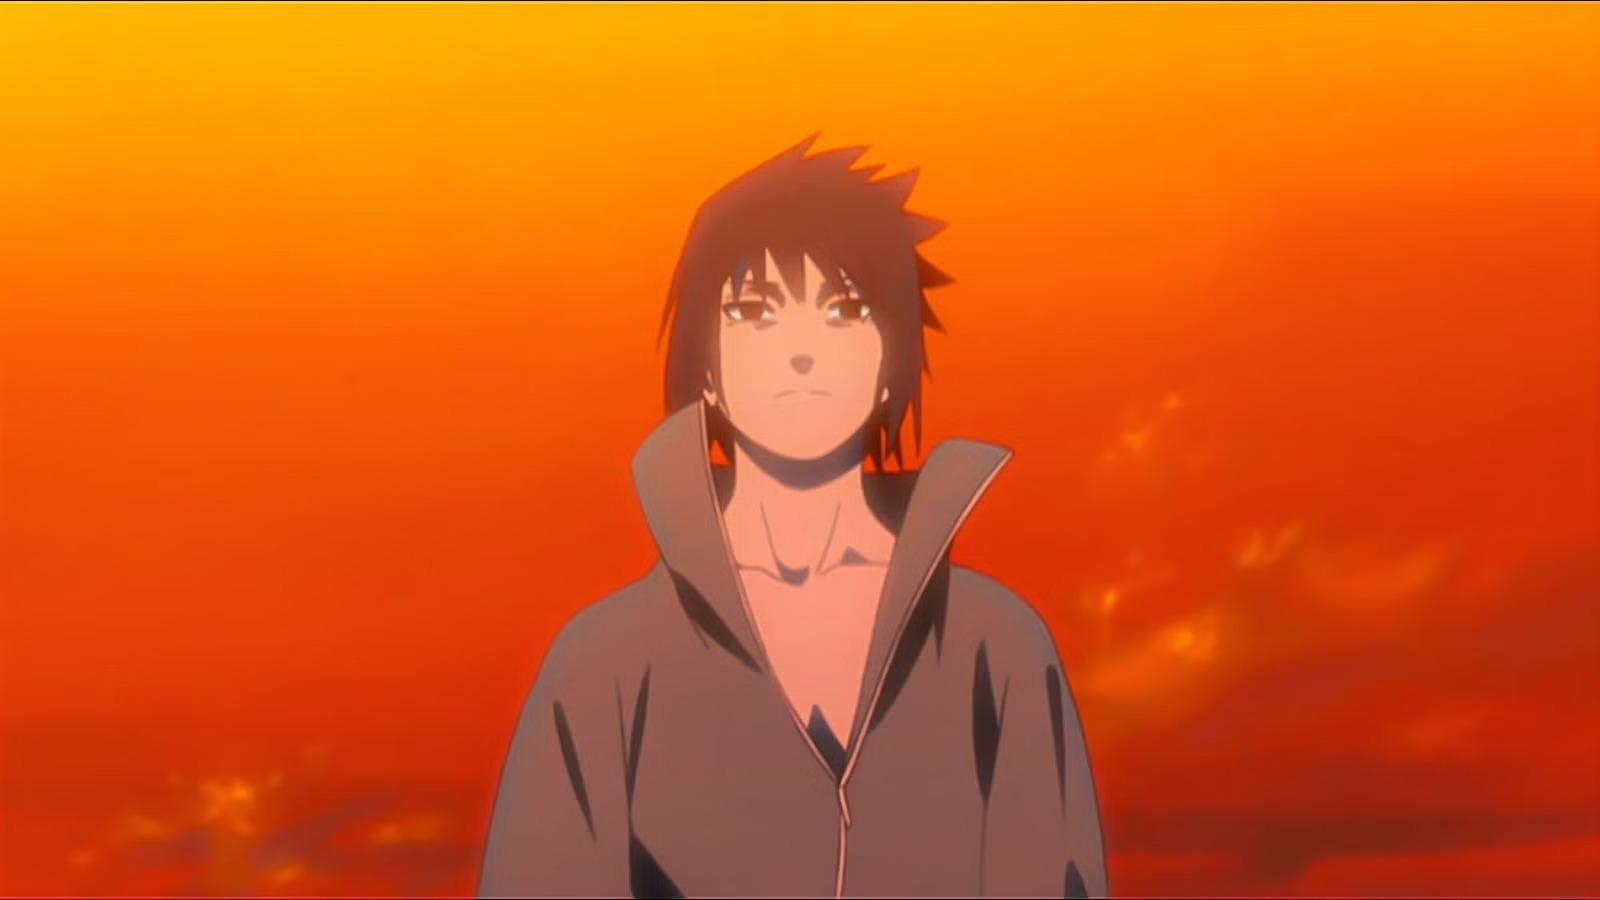 An image of Sasuke embodying the Uchiha Clan's curse of hatred